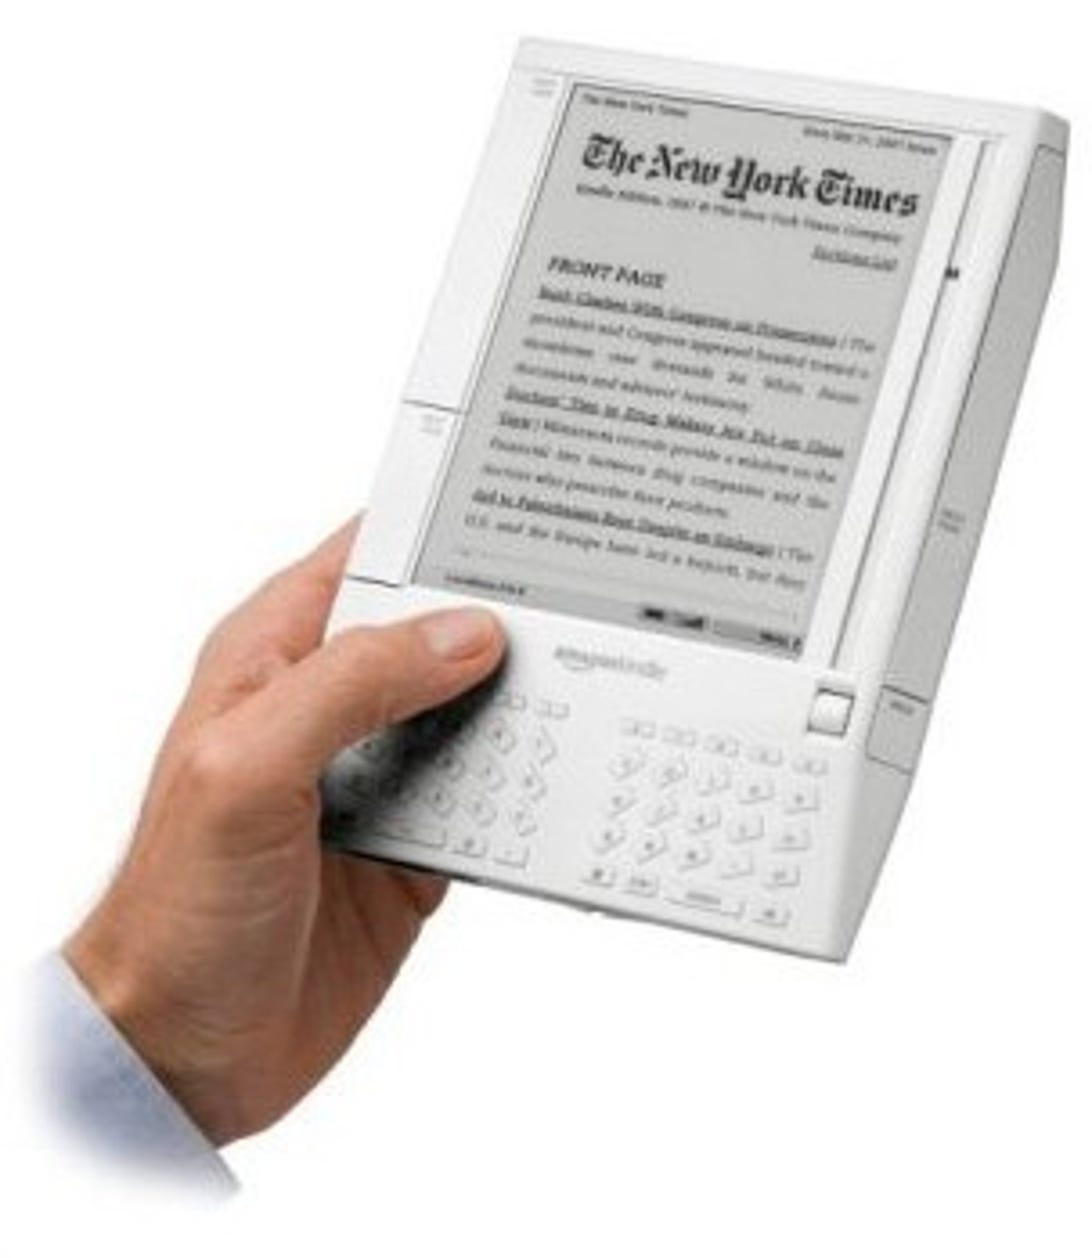 Amazon's Kindle e-book reader.